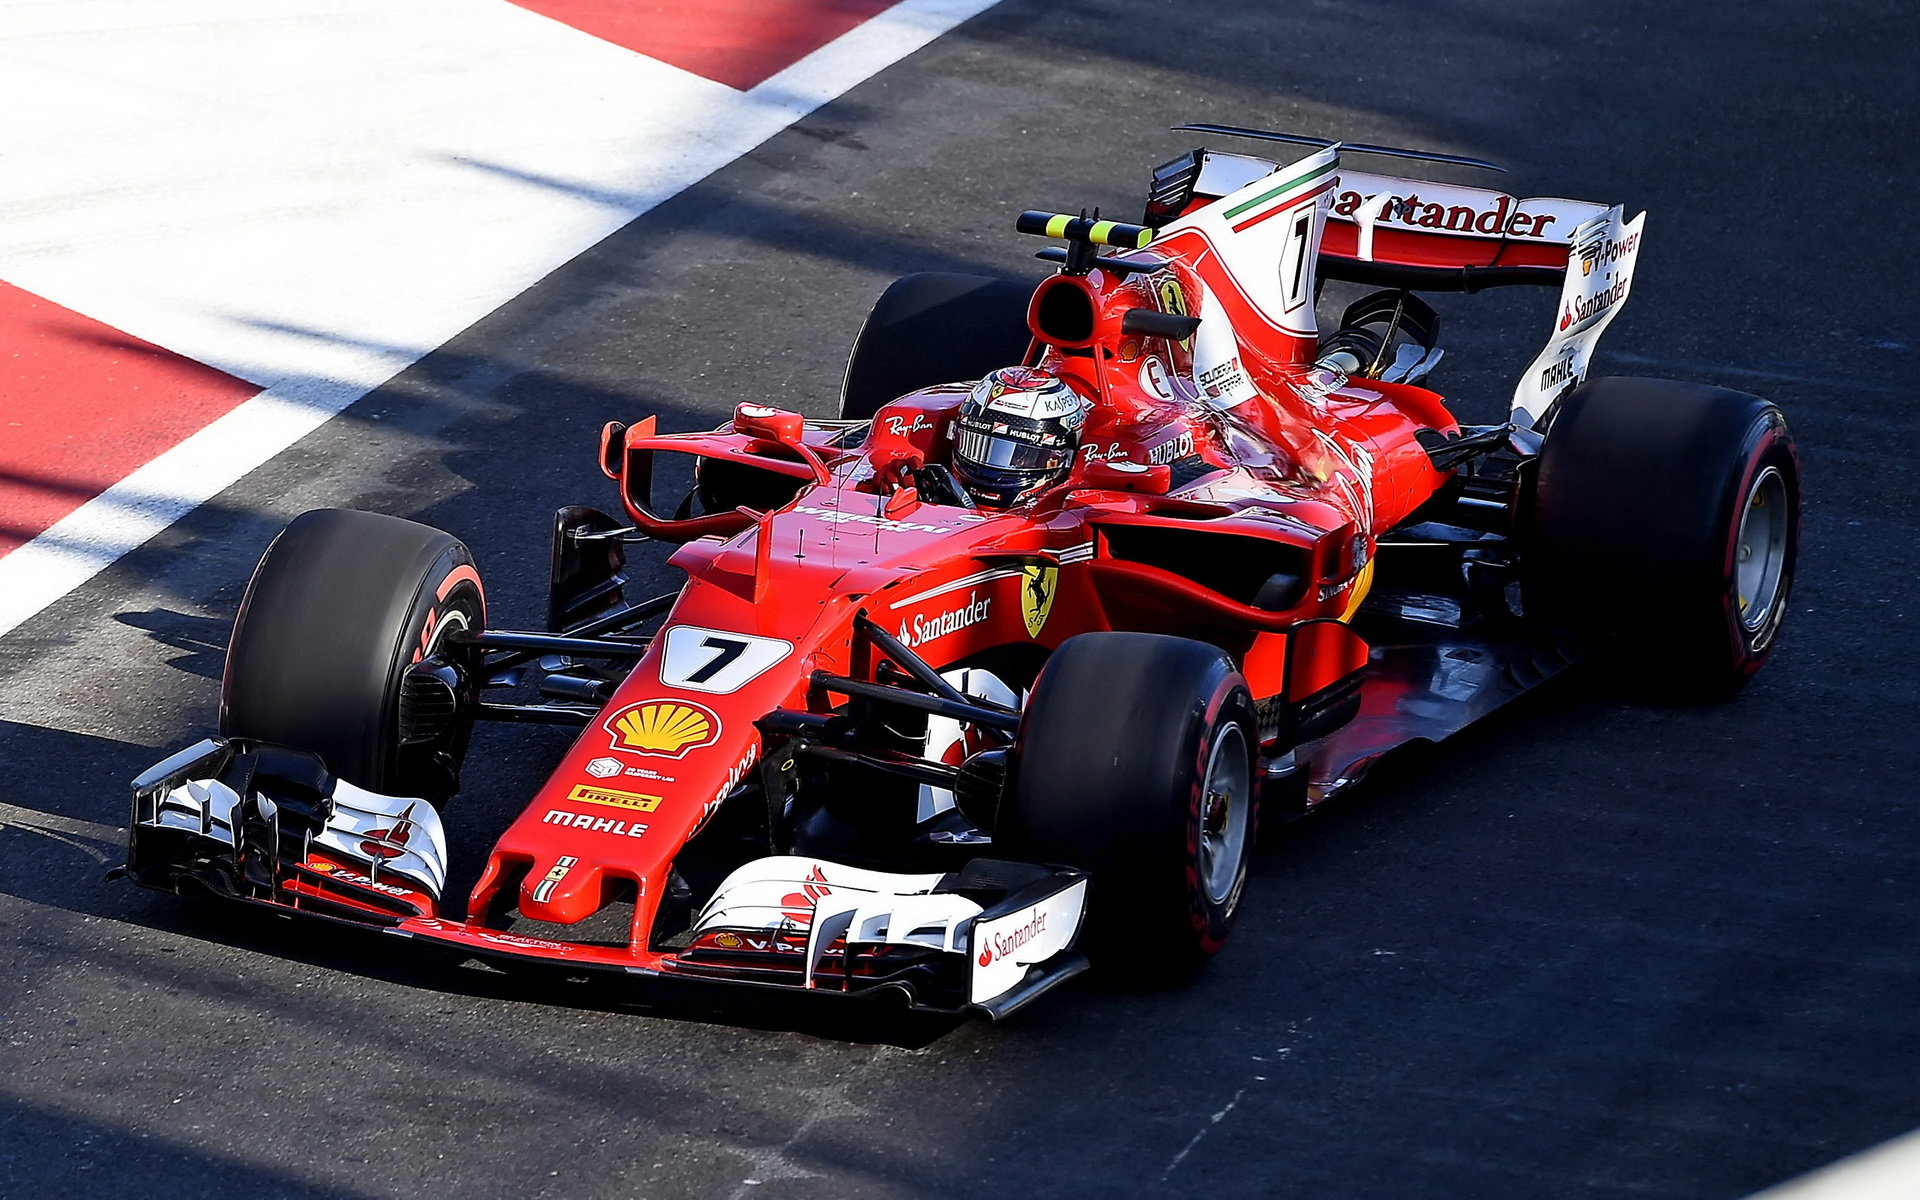 Kimi Räikkönen v kvalifikaci v Baku